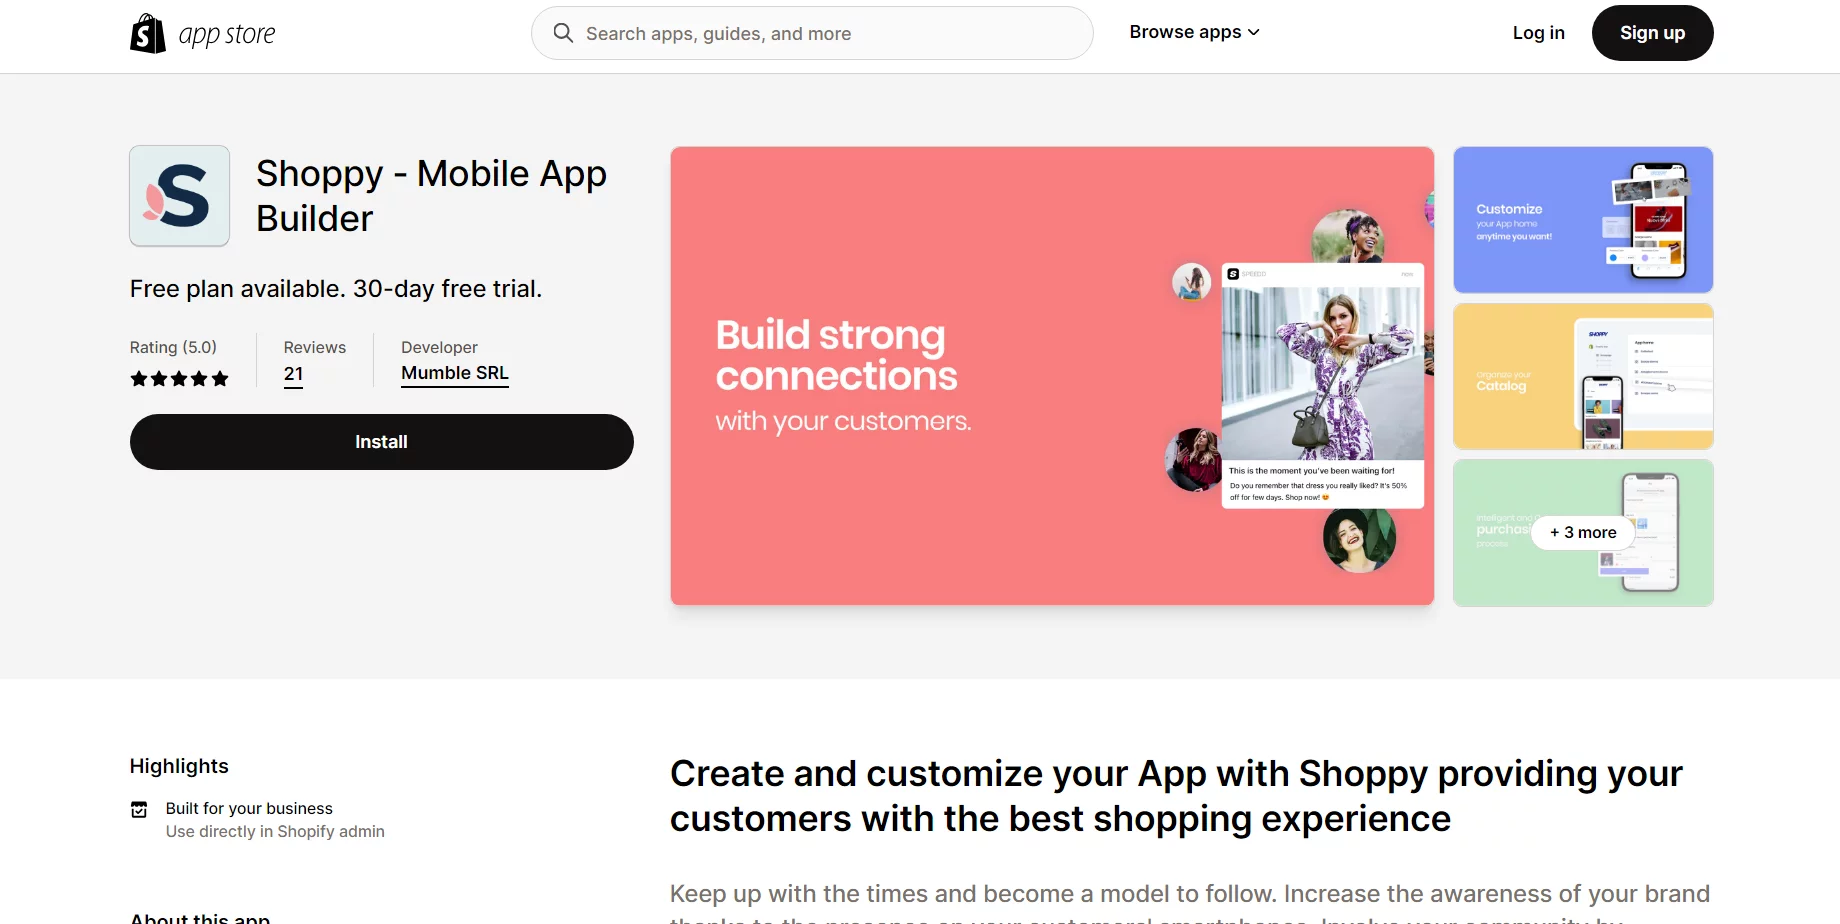 Best Shopify SMS Apps: Shoppy ‑ Mobile App Builder